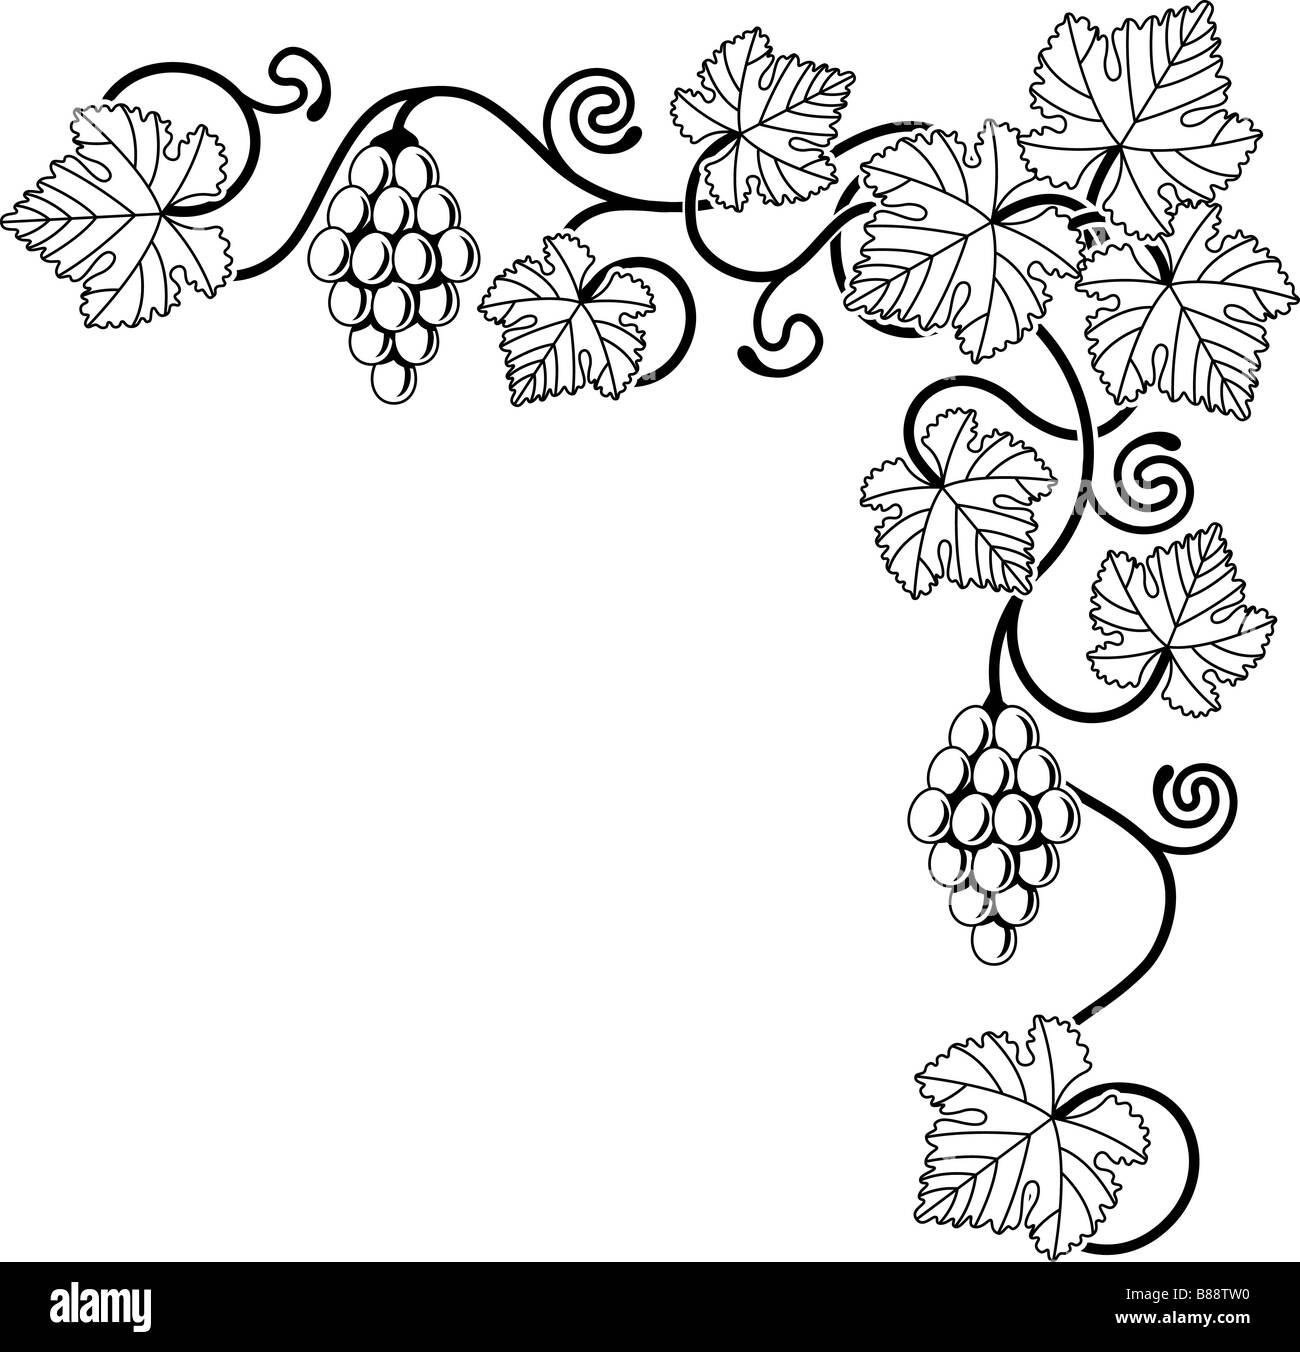 Grapevine Pattern Clipart